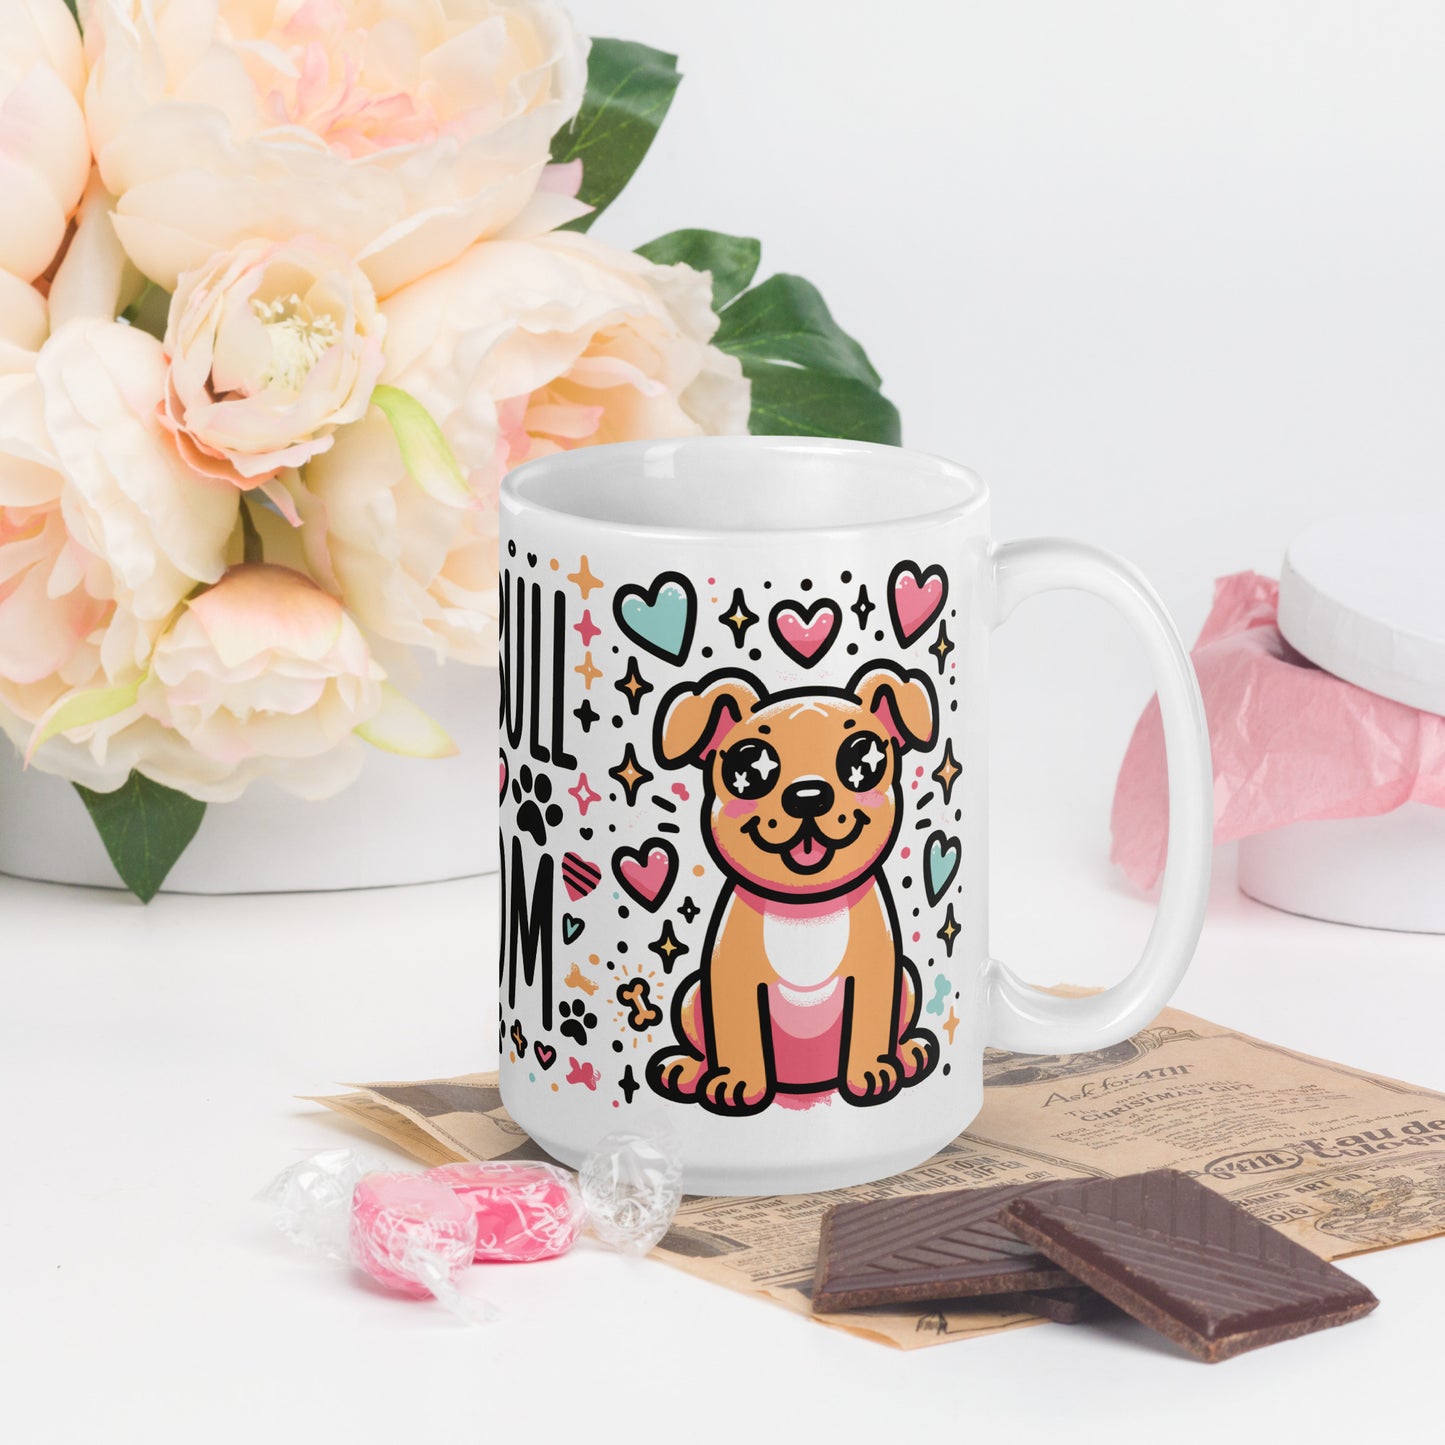 Pitbull Mom Coffee Mug - A Toast to Pit Bull Love - Pittie Choy